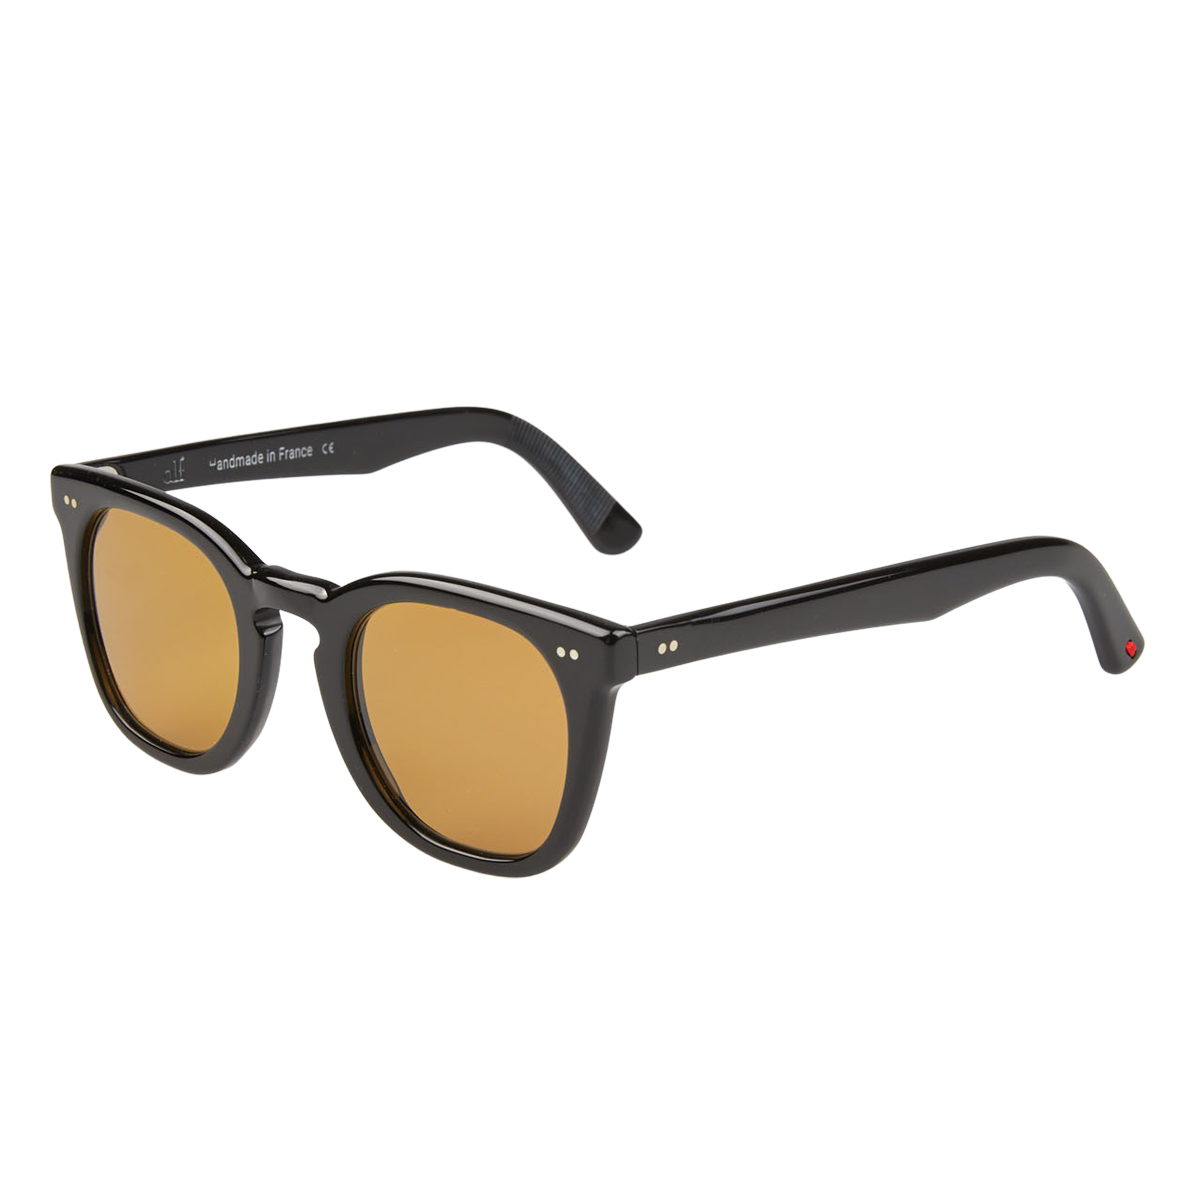 Lunettes Alf Black A22.13.001 Sunglasses Feature